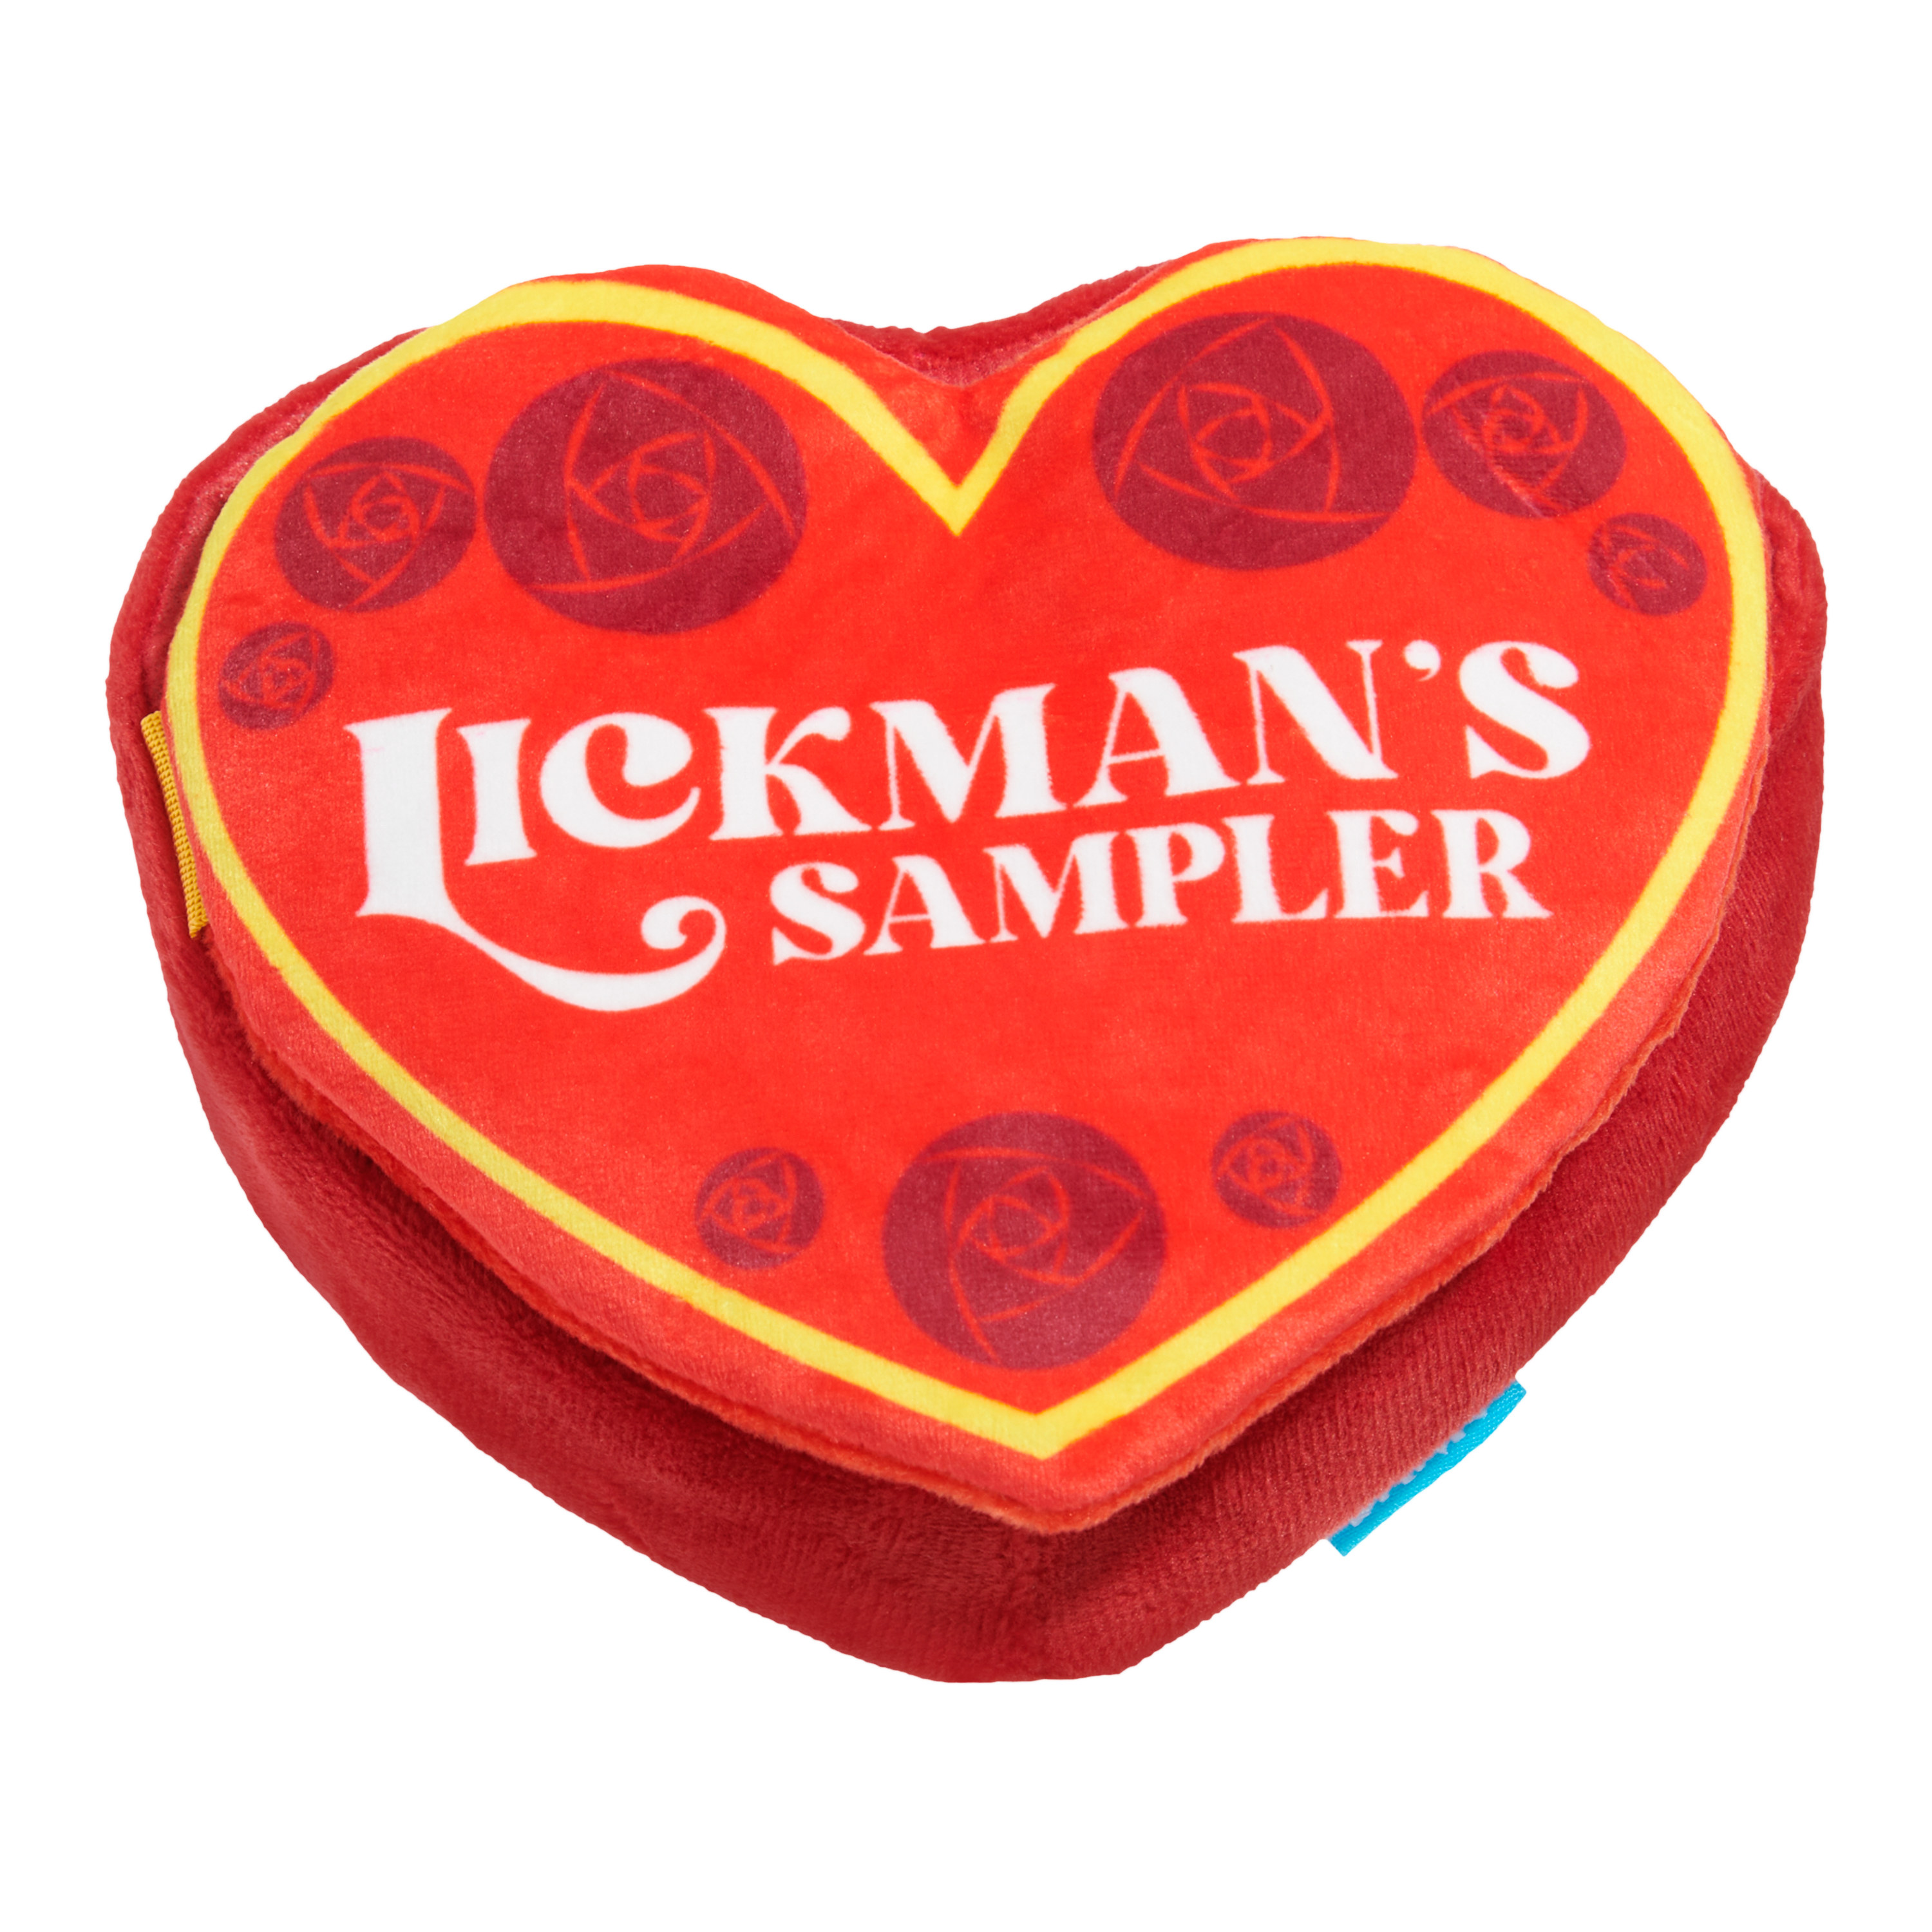 Photograph of BarkBox’s Lickman’s Sampler product